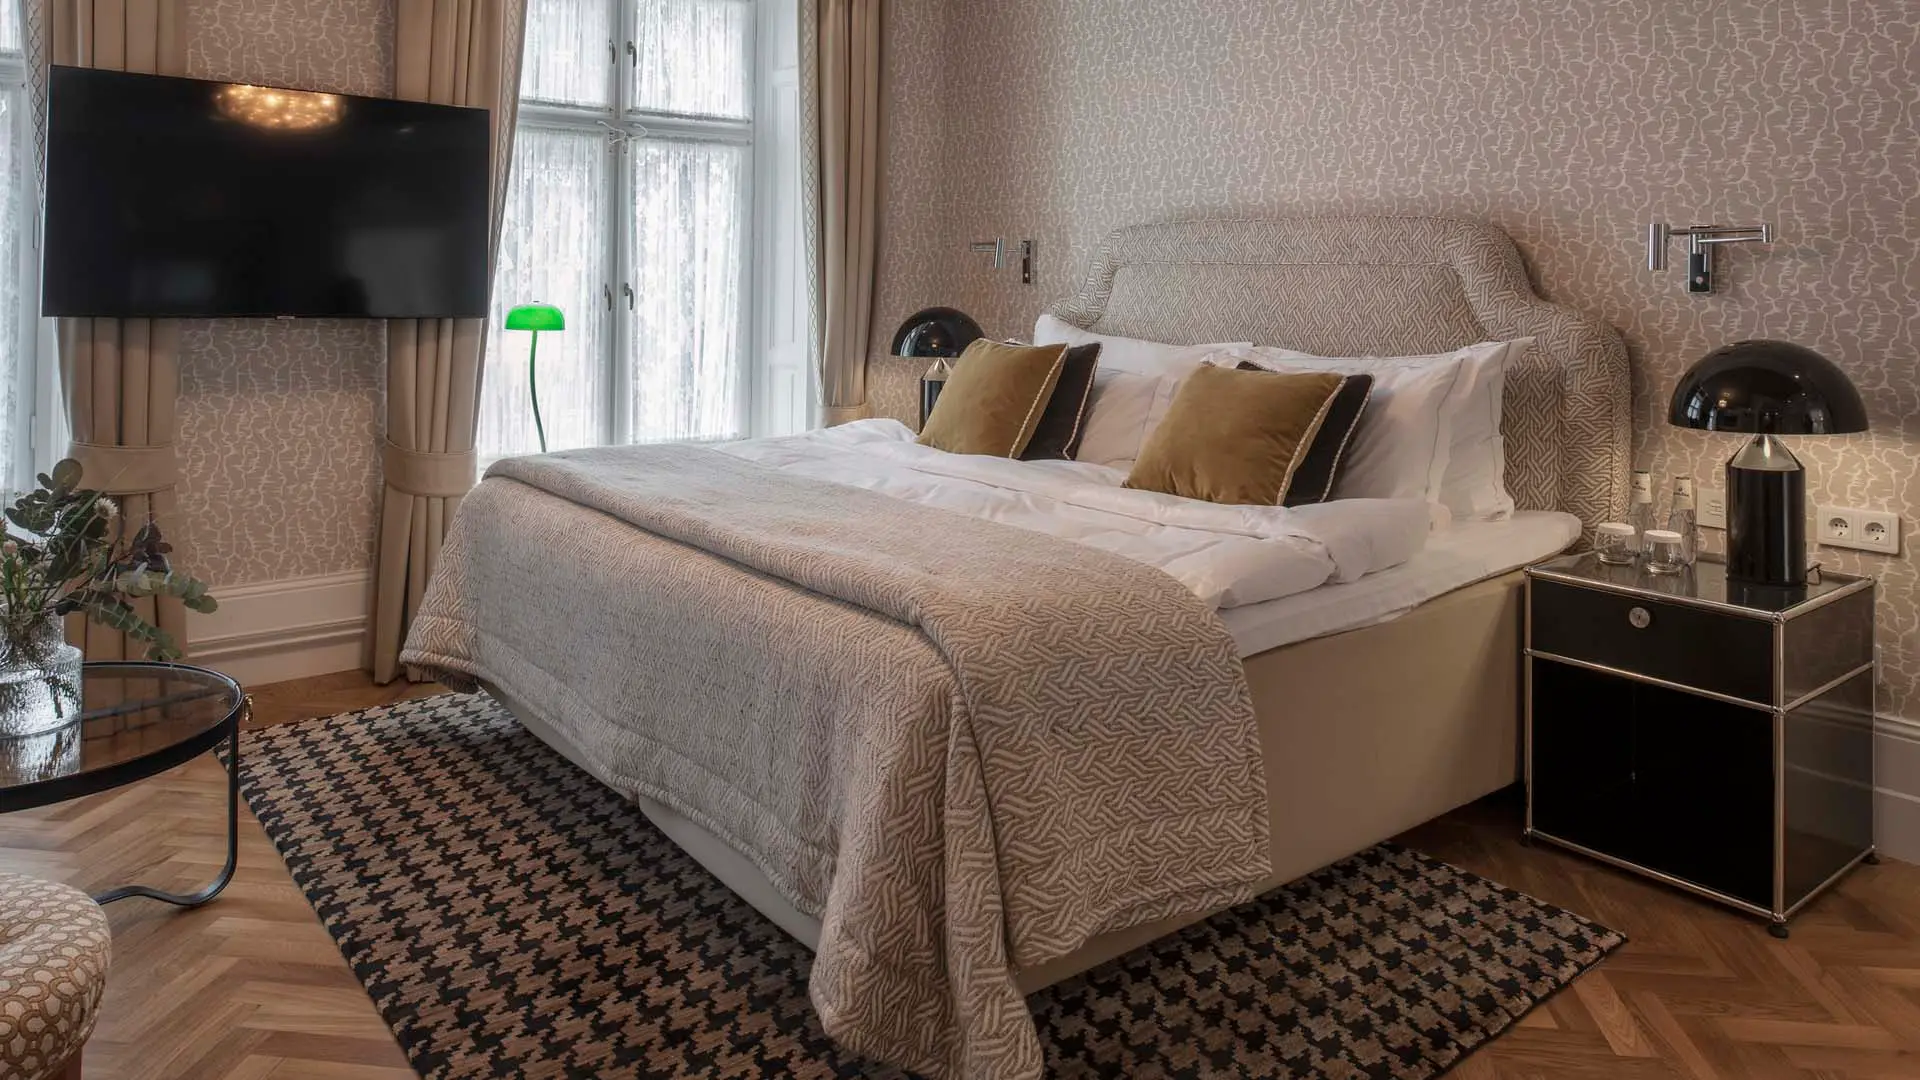 Hotel review Accommodation' - Grand Hôtel Stockholm - 3